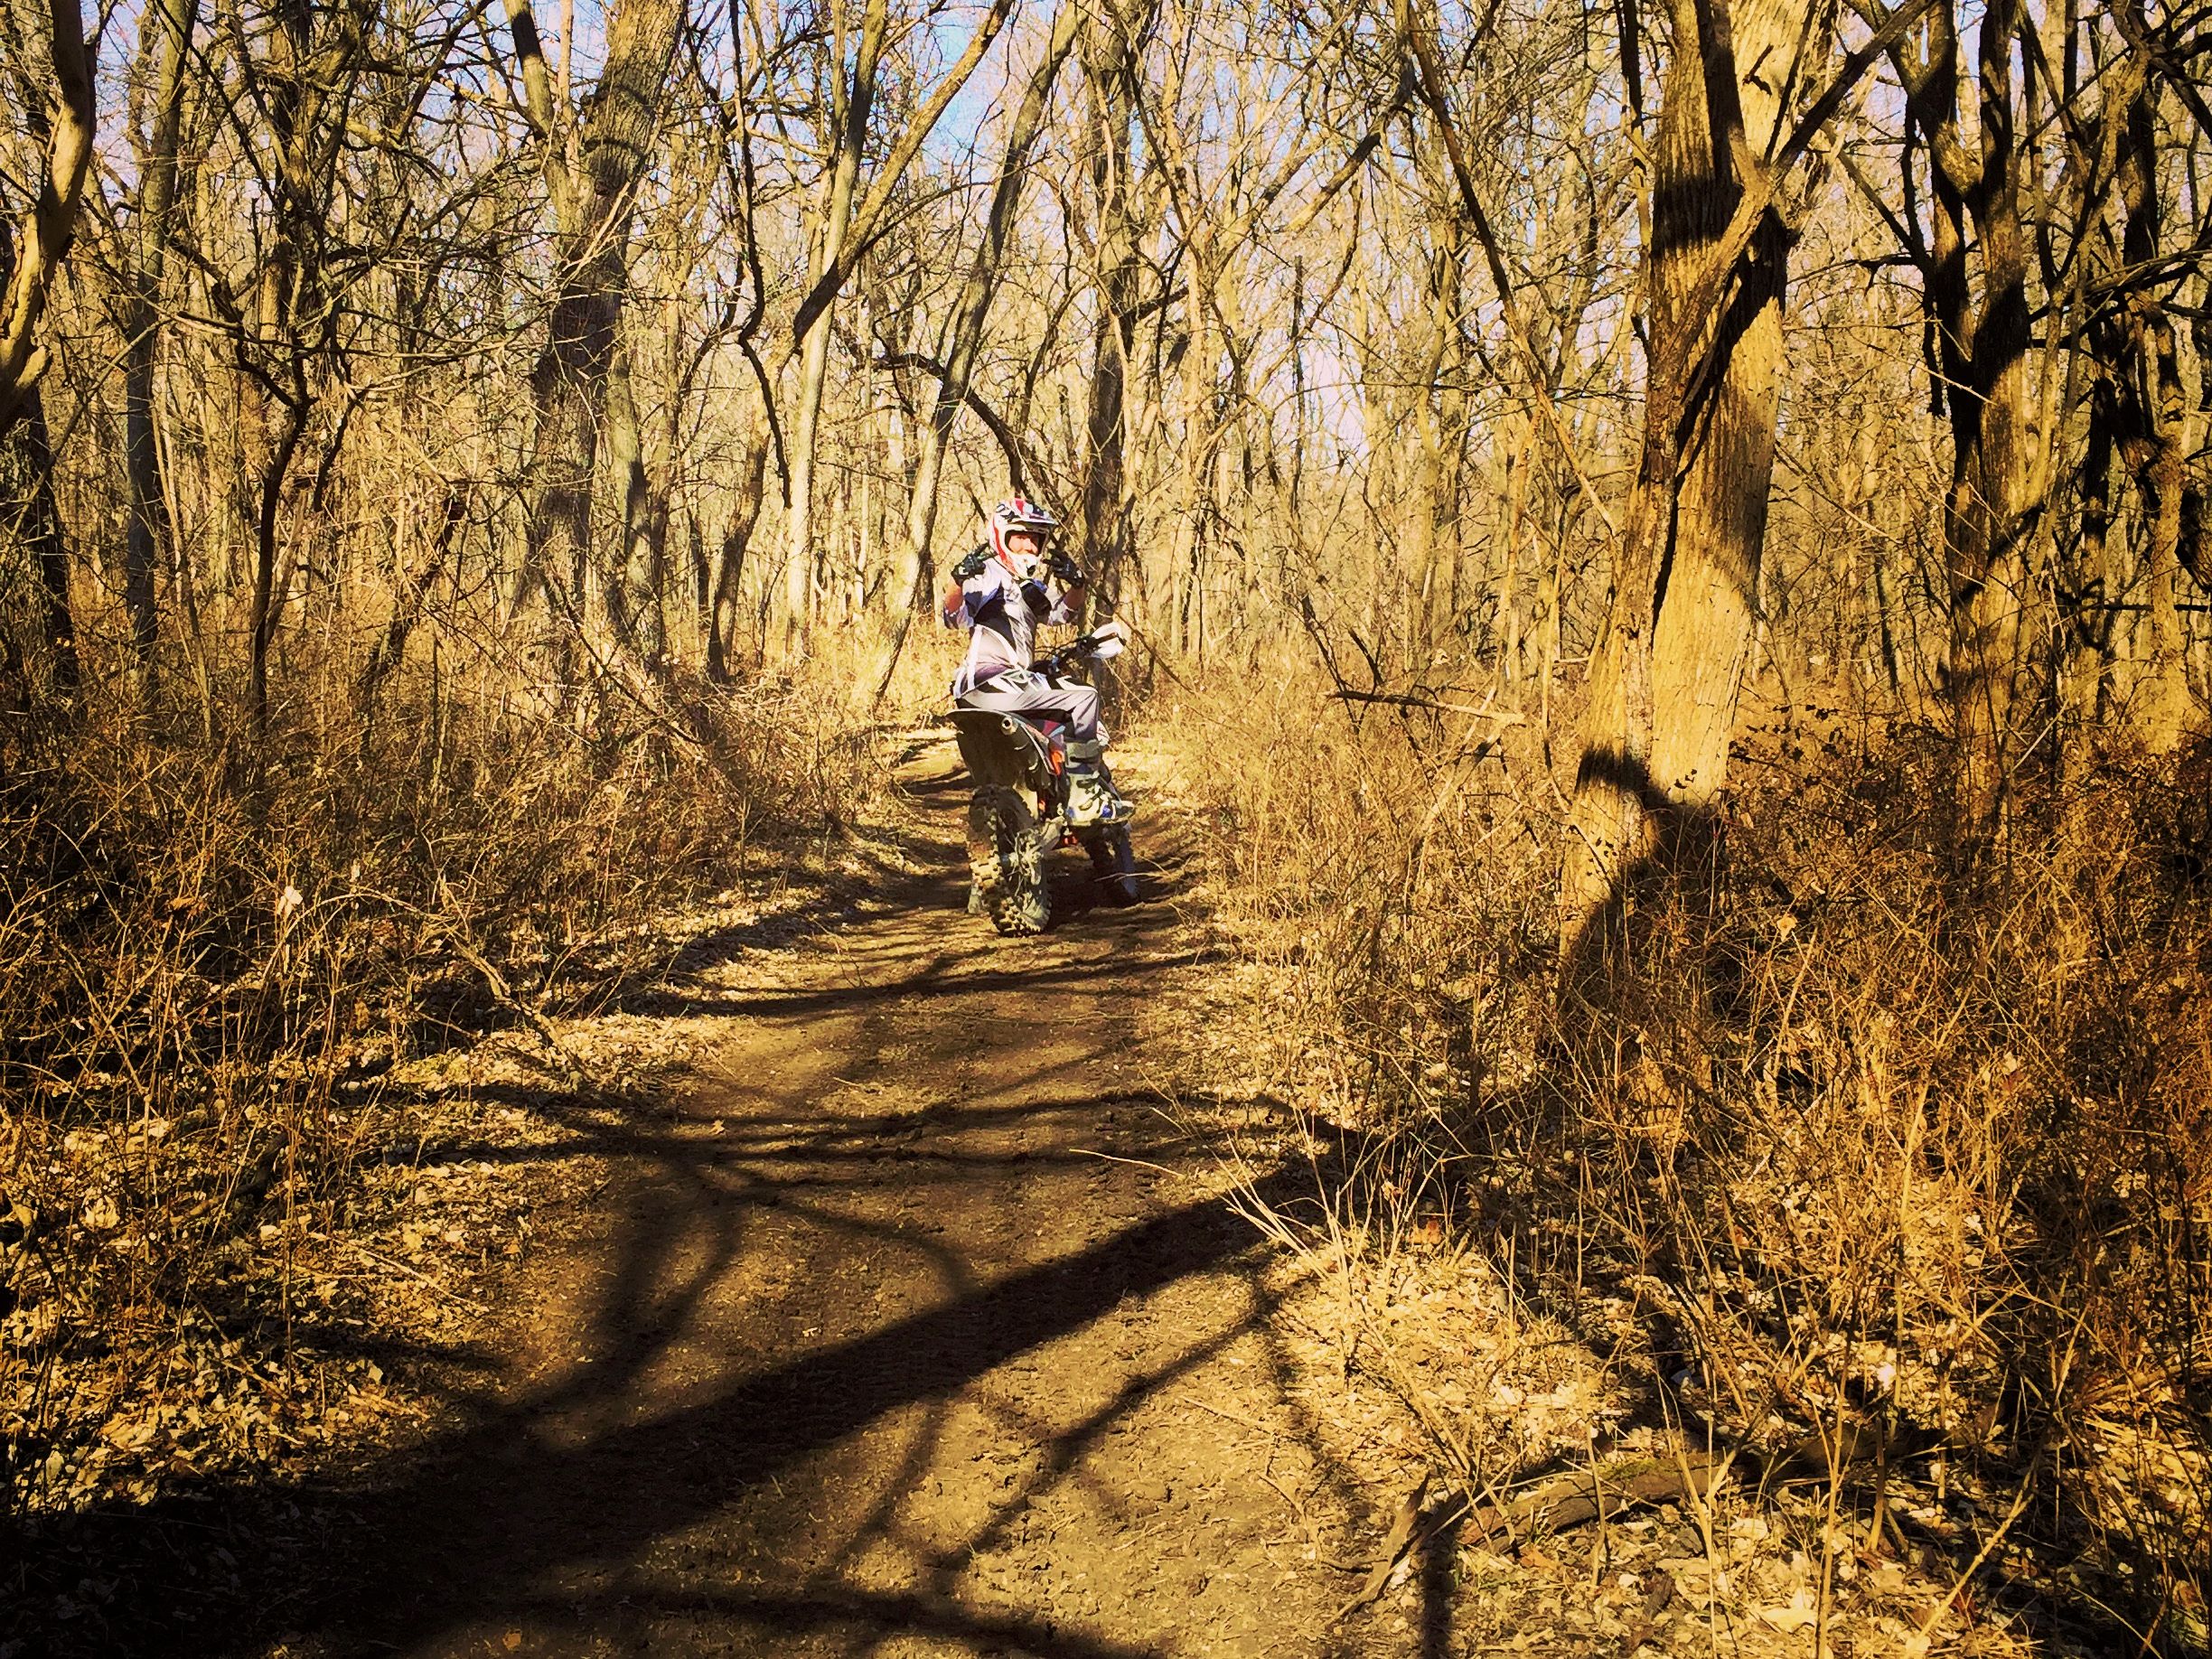 Dirt bike on ATV trail in the woods.